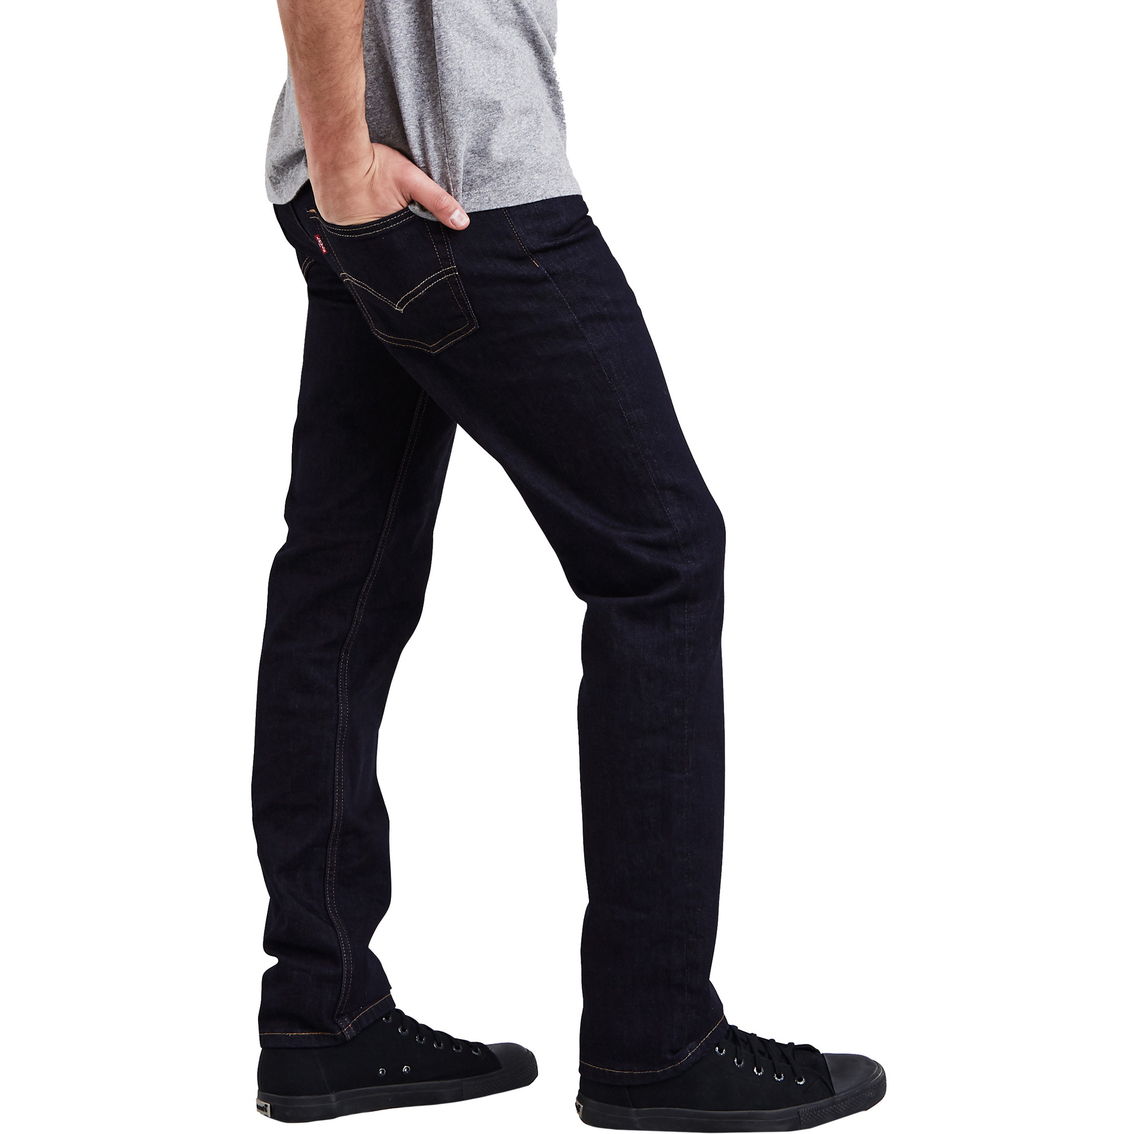 Levi's 511 Slim Fit Jeans - Image 3 of 3